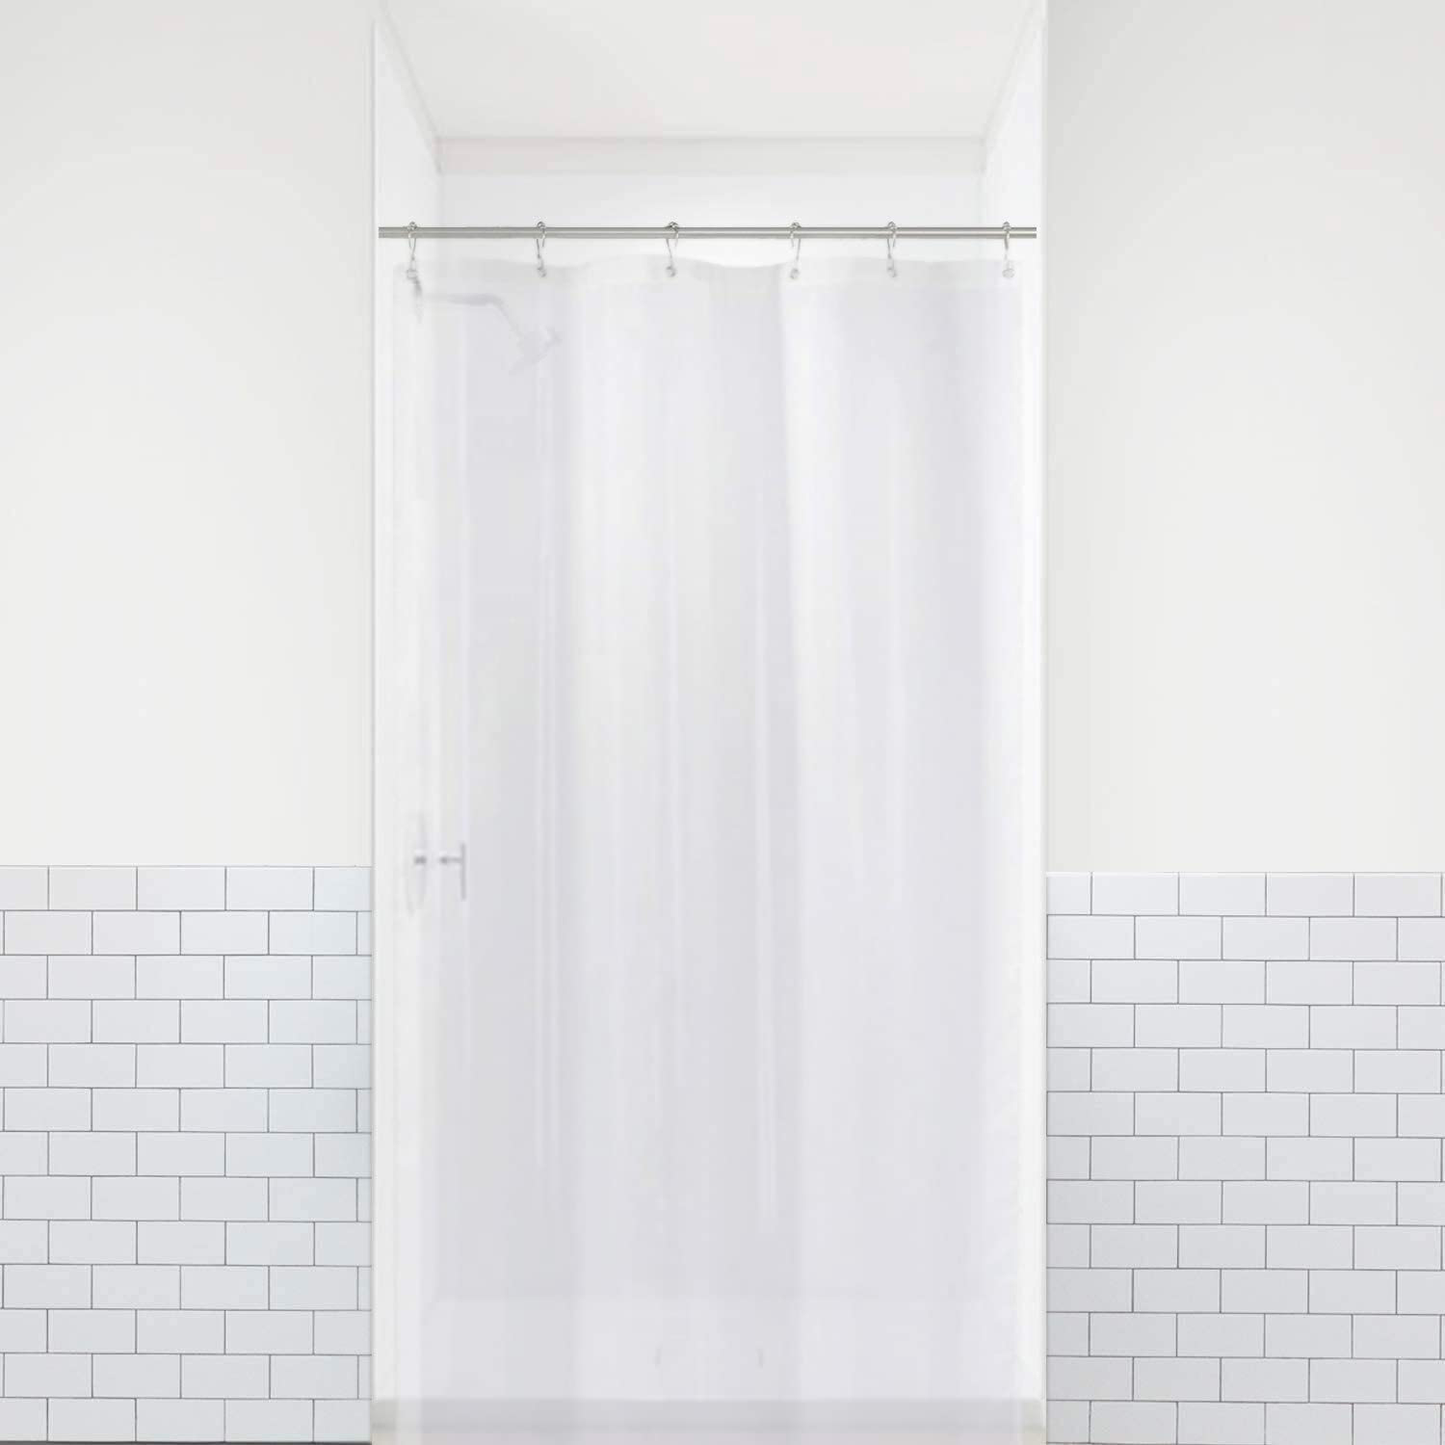 LiBa PEVA 8G Bathroom Small Shower Stall Curtain Liner, 8G Heavy Duty Waterproof Shower Stall Curtain Liner